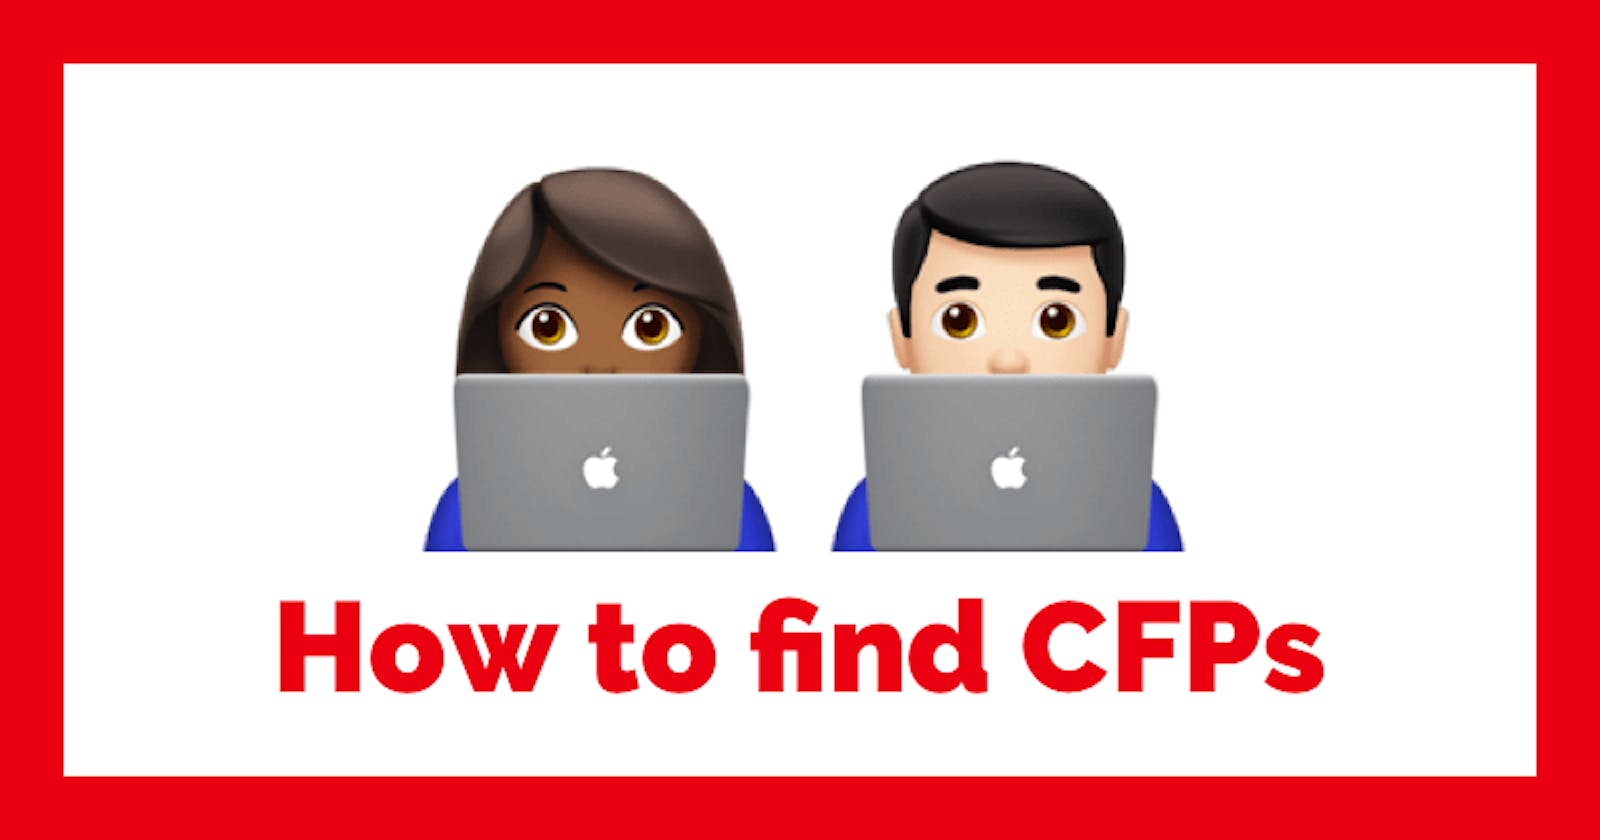 How to find CFPs for developer conferences